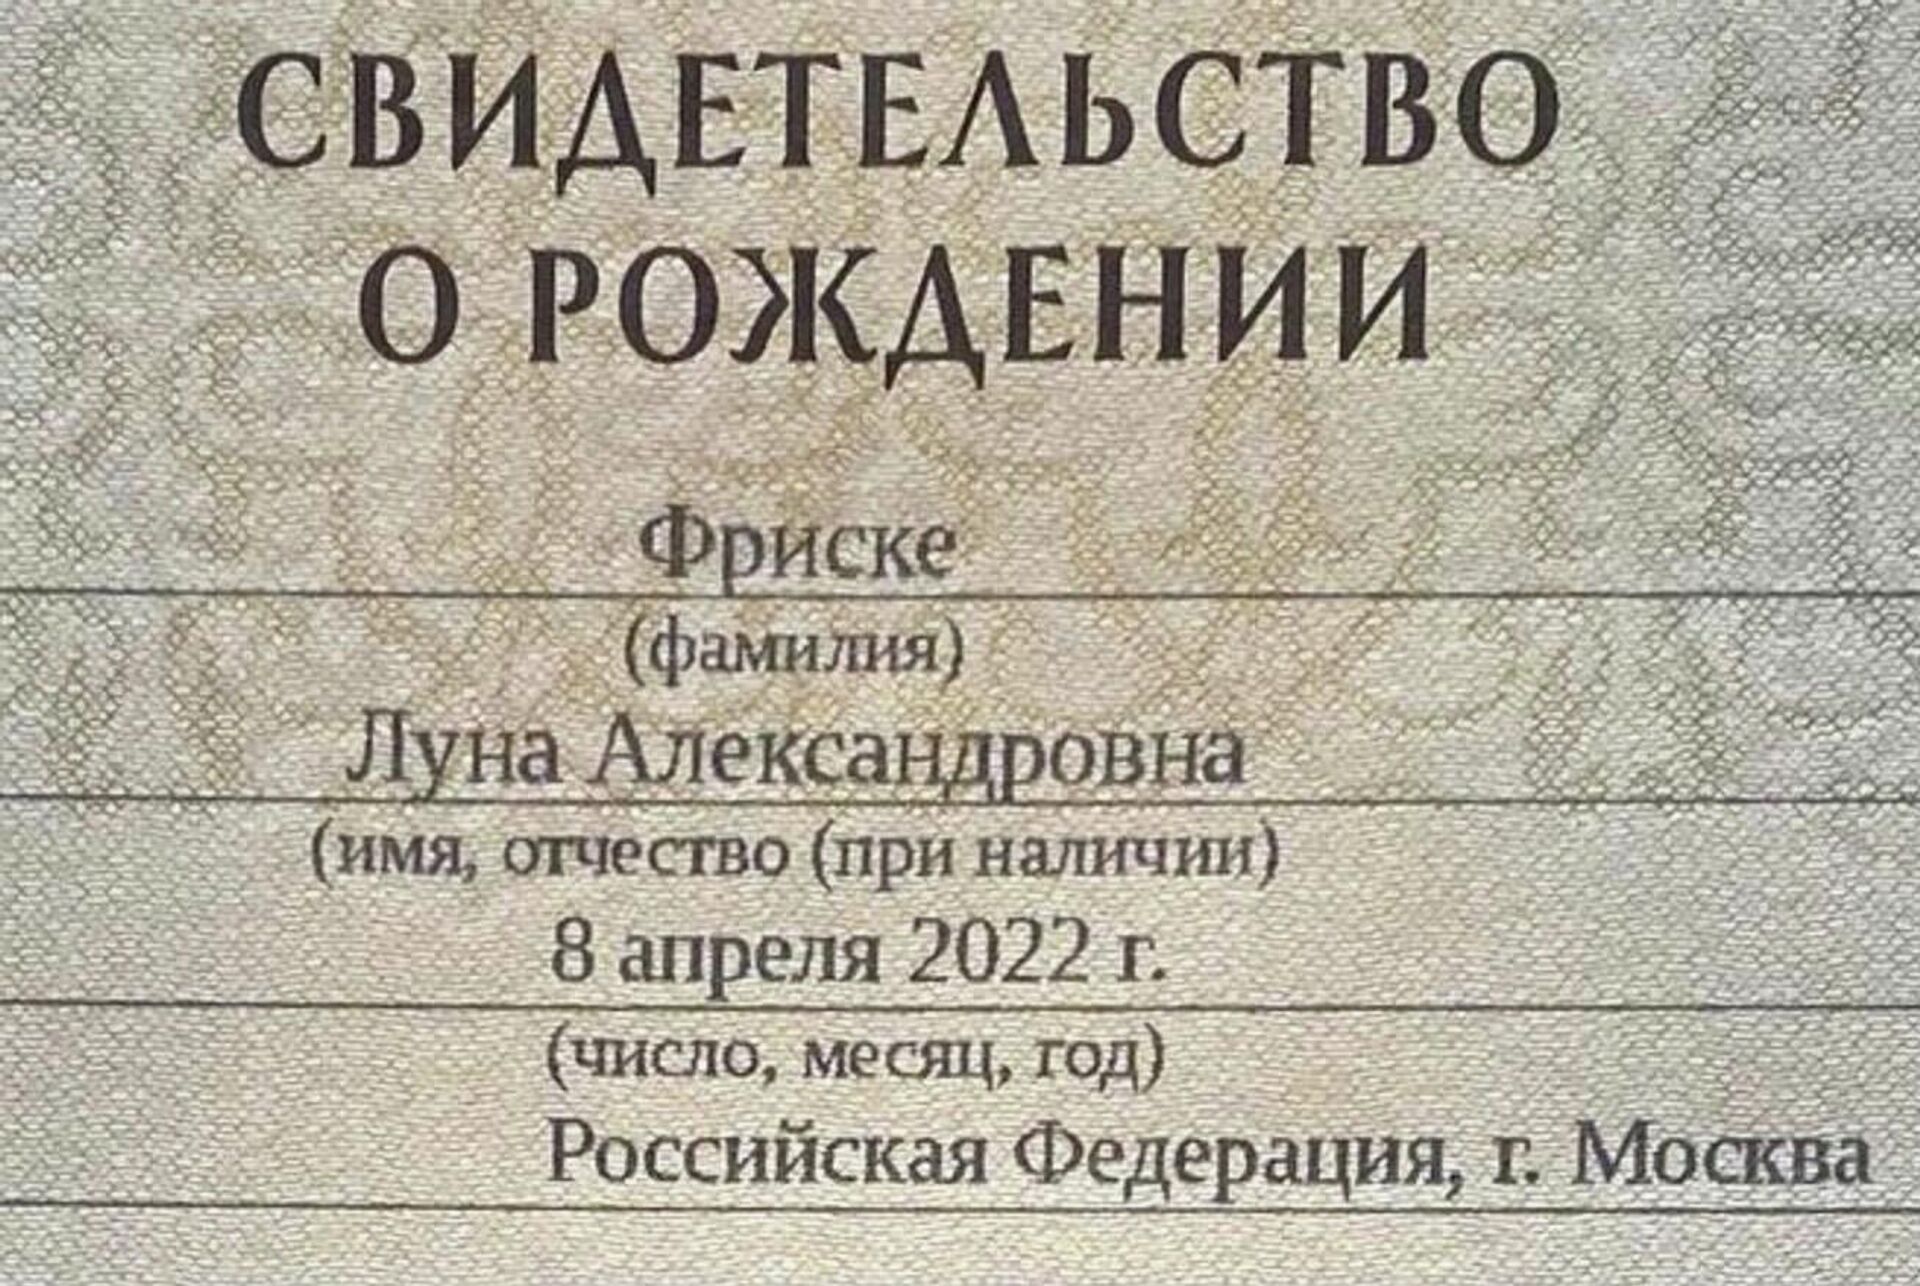 Фото из telegram-аккаунта Натальи Фриске - РИА Новости, 1920, 15.04.2022